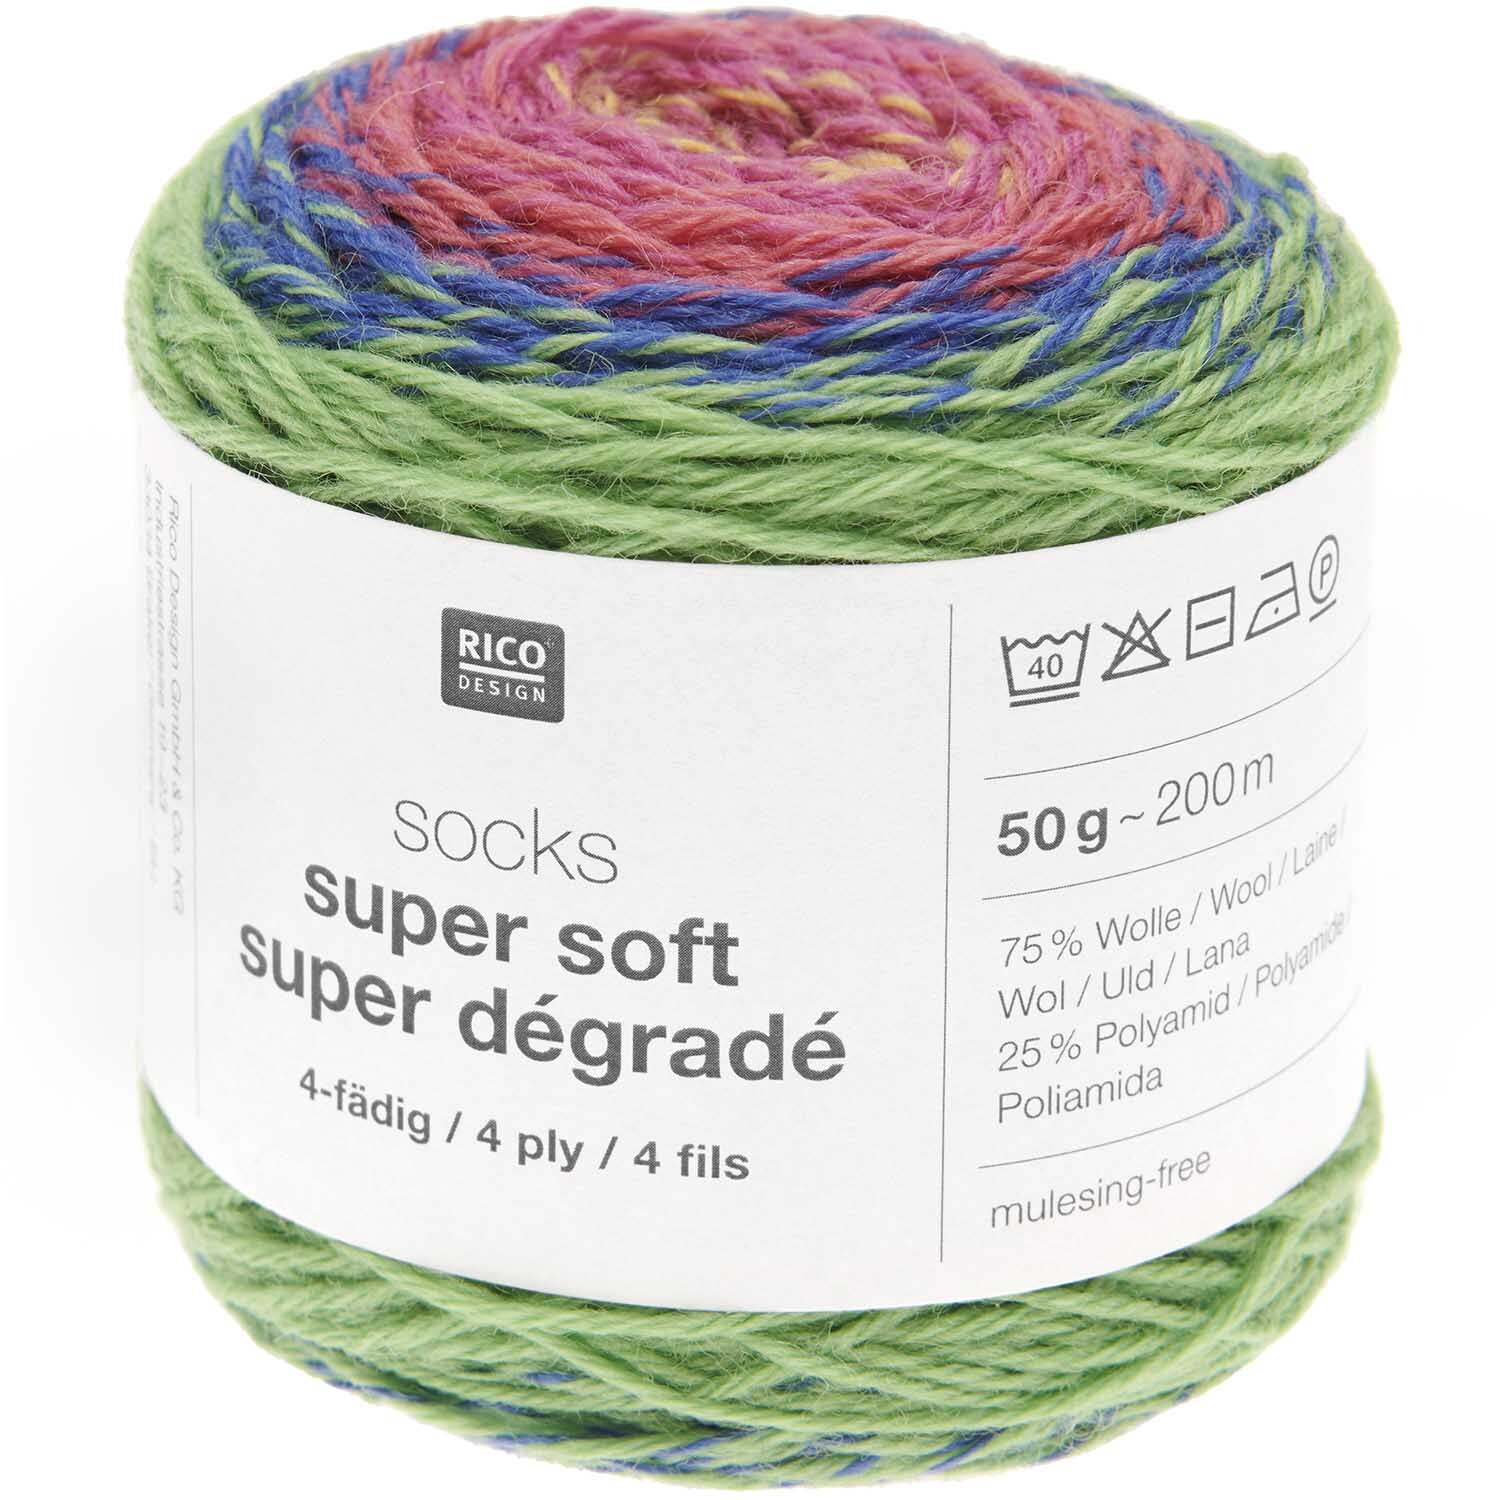 Socks Super Soft Super Dégradé 4-fädig